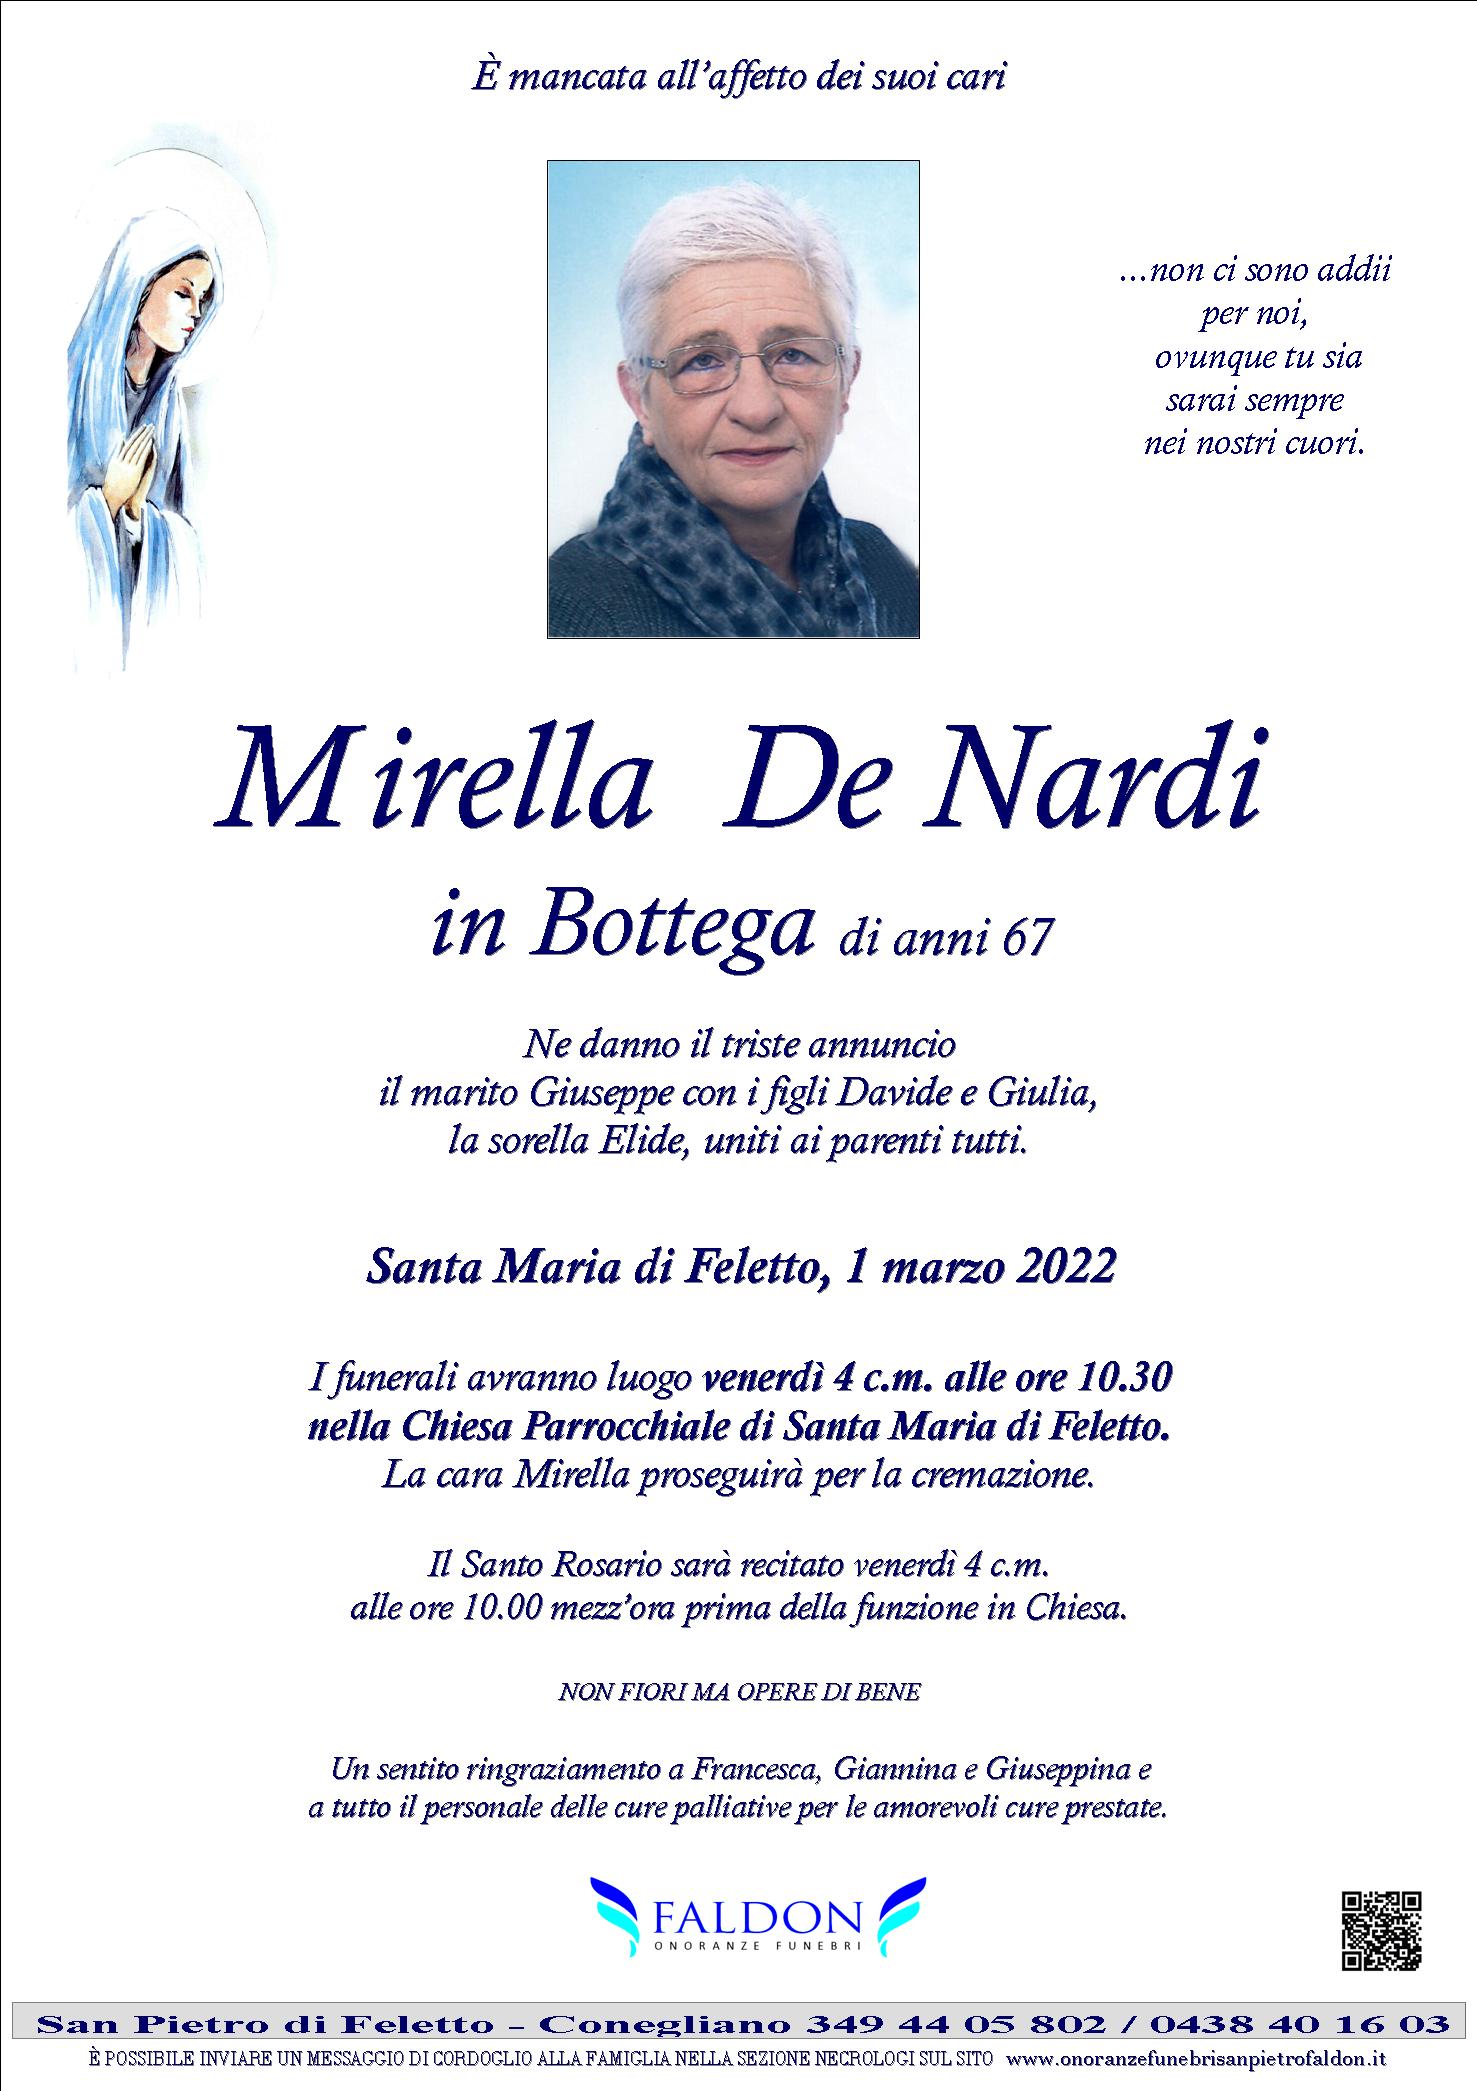 Mirella De Nardi